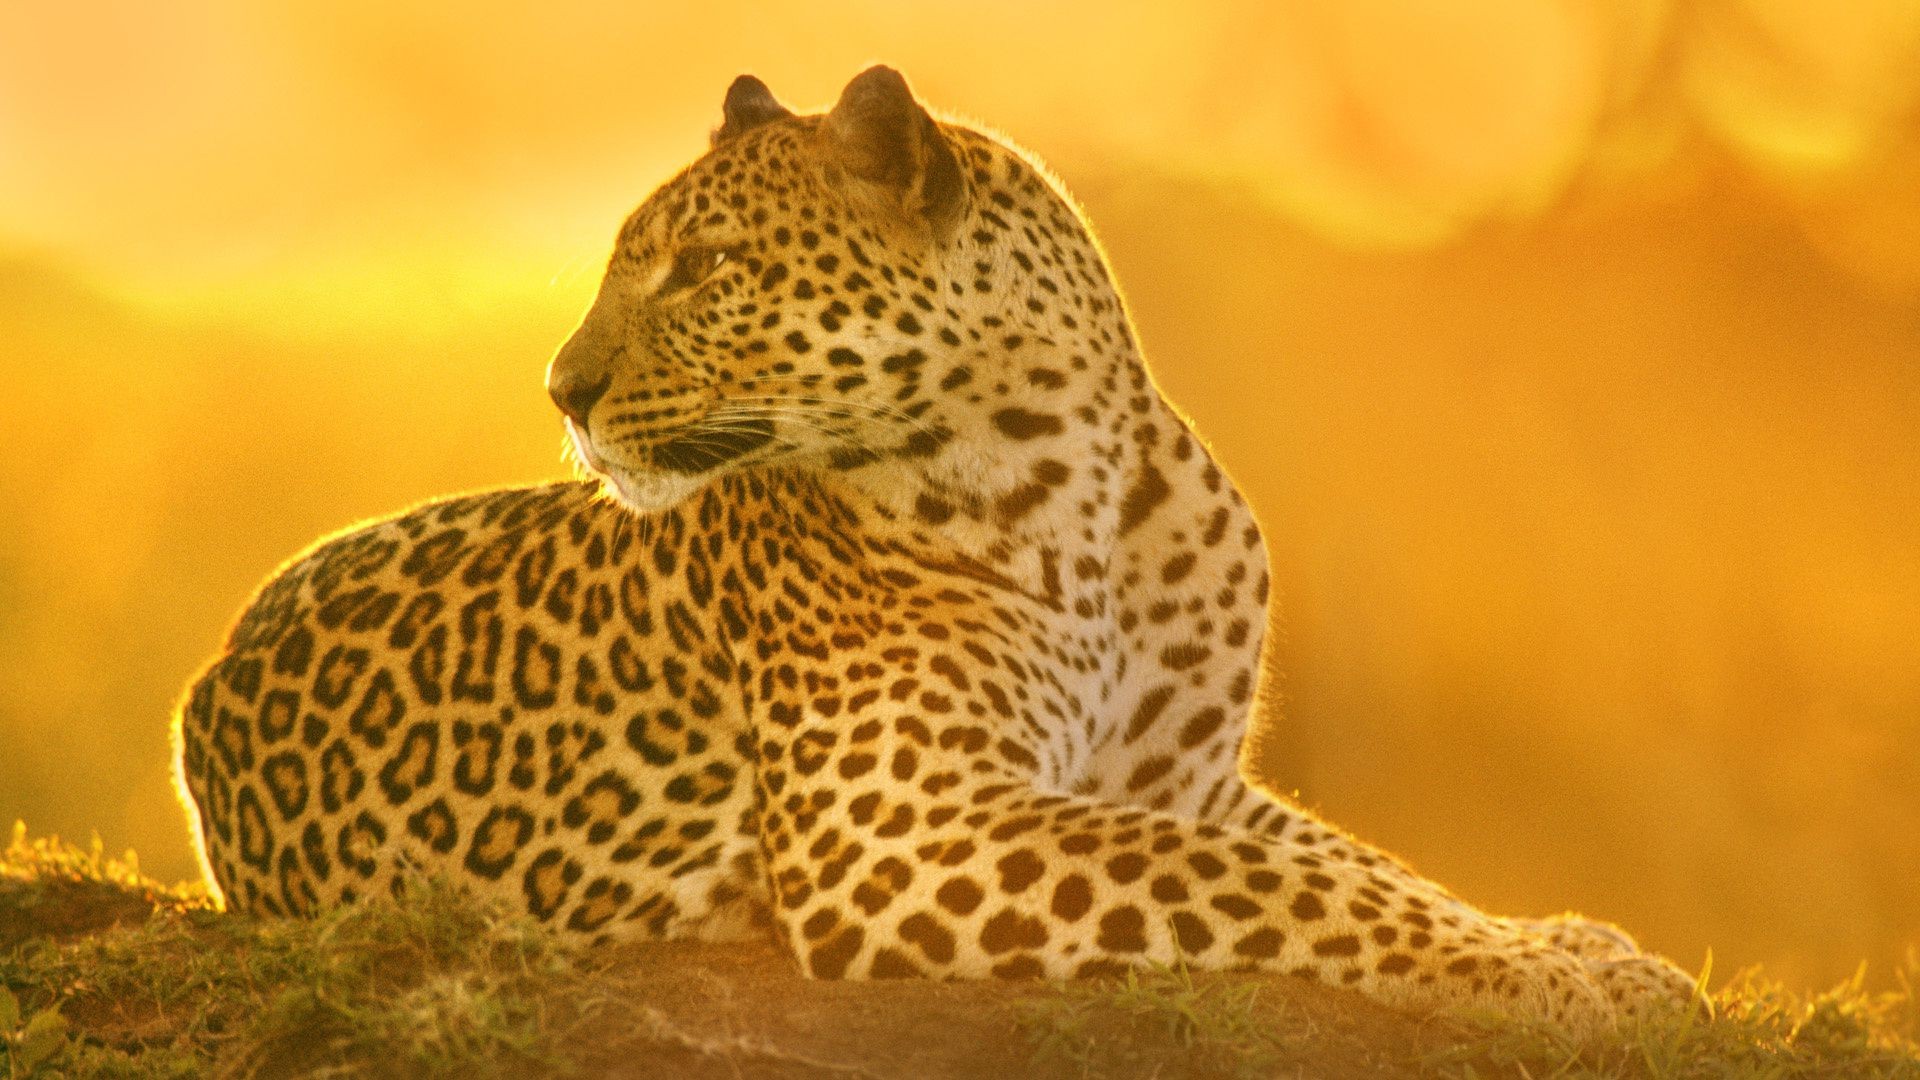 leopards nature wildlife cat leopard mammal outdoors exotic portrait safari